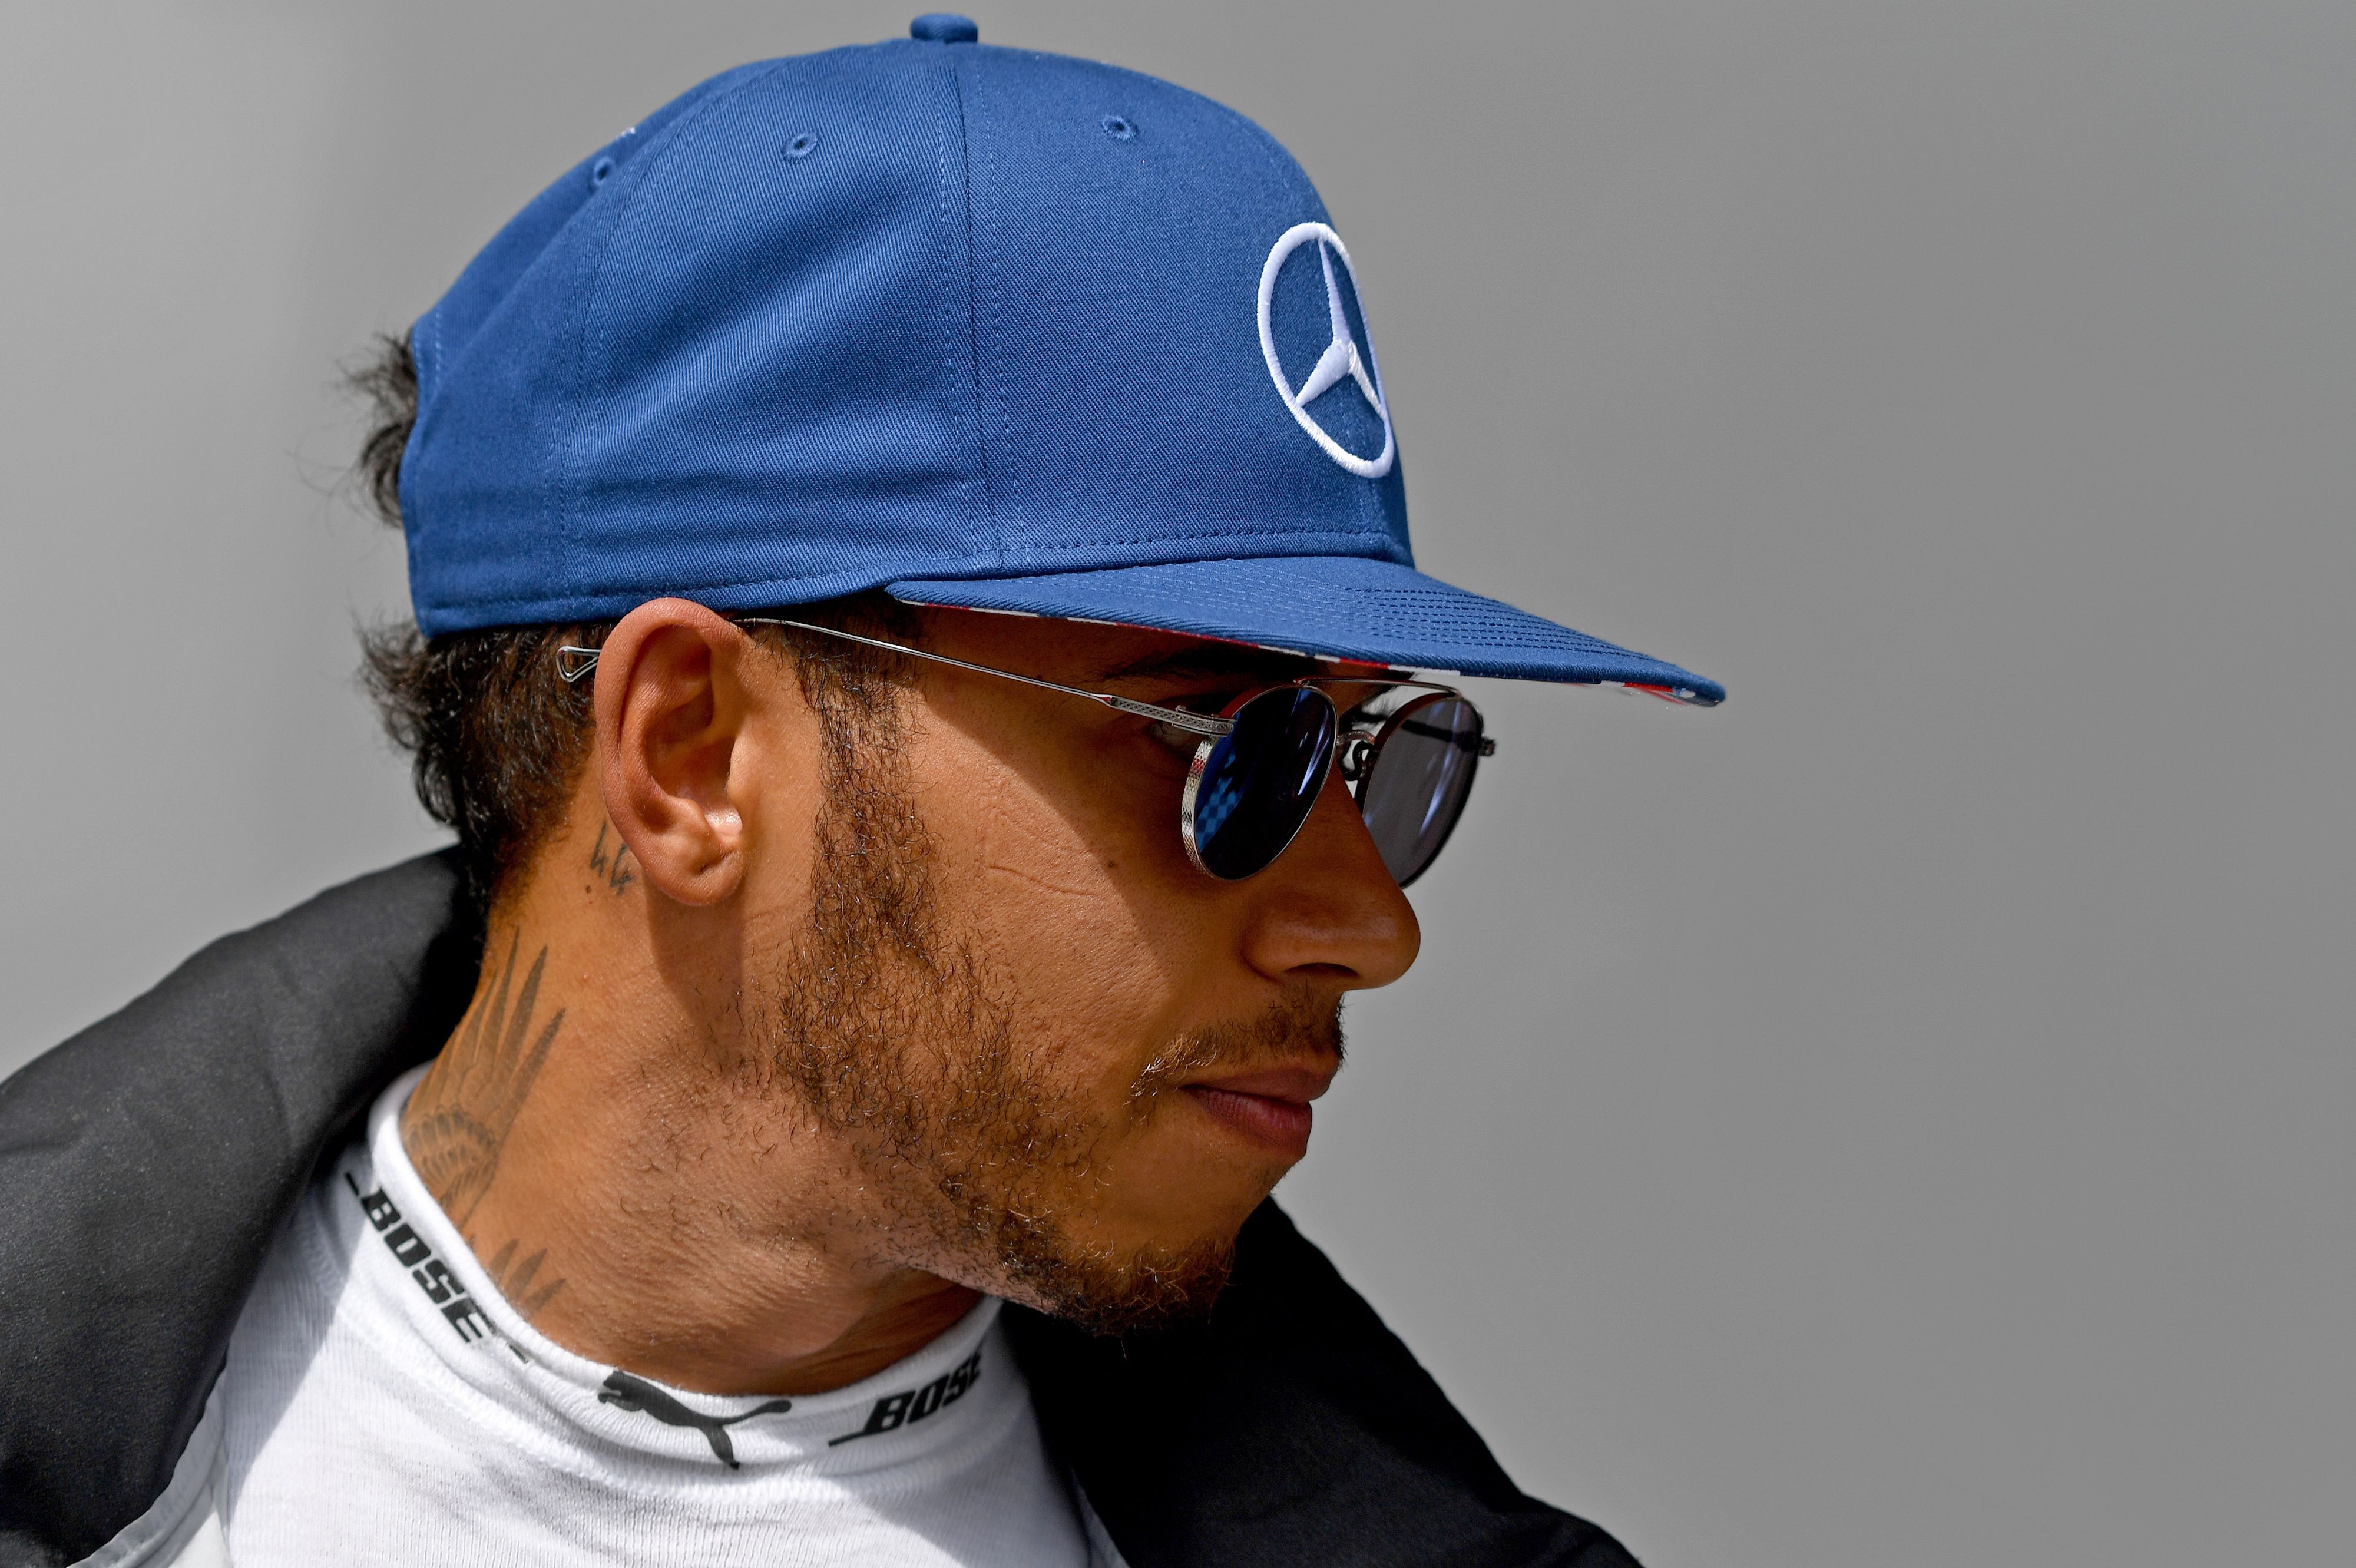 Motor racing: Hamilton fastest as Rosberg hits trouble